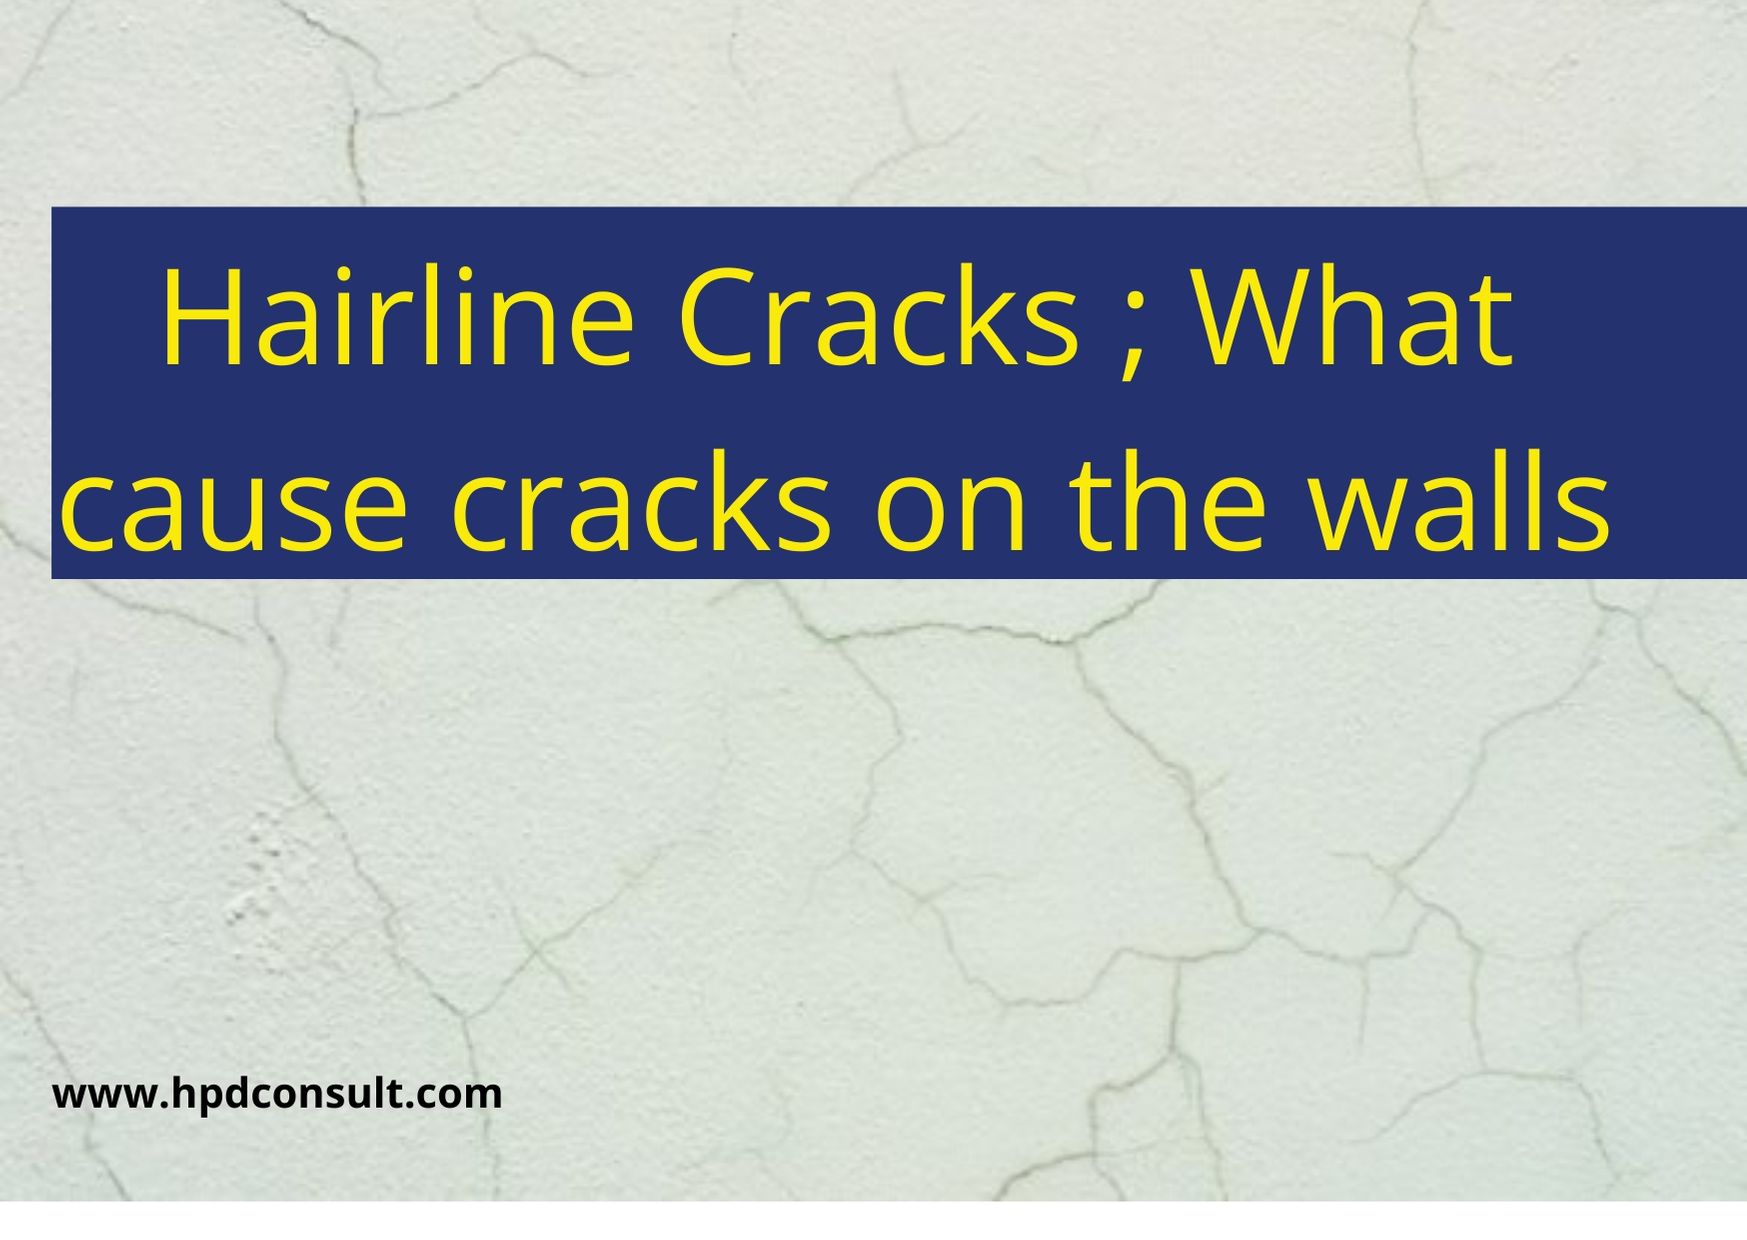 Hairline Cracks: Top 4 Causes of Hairline Cracks on Walls